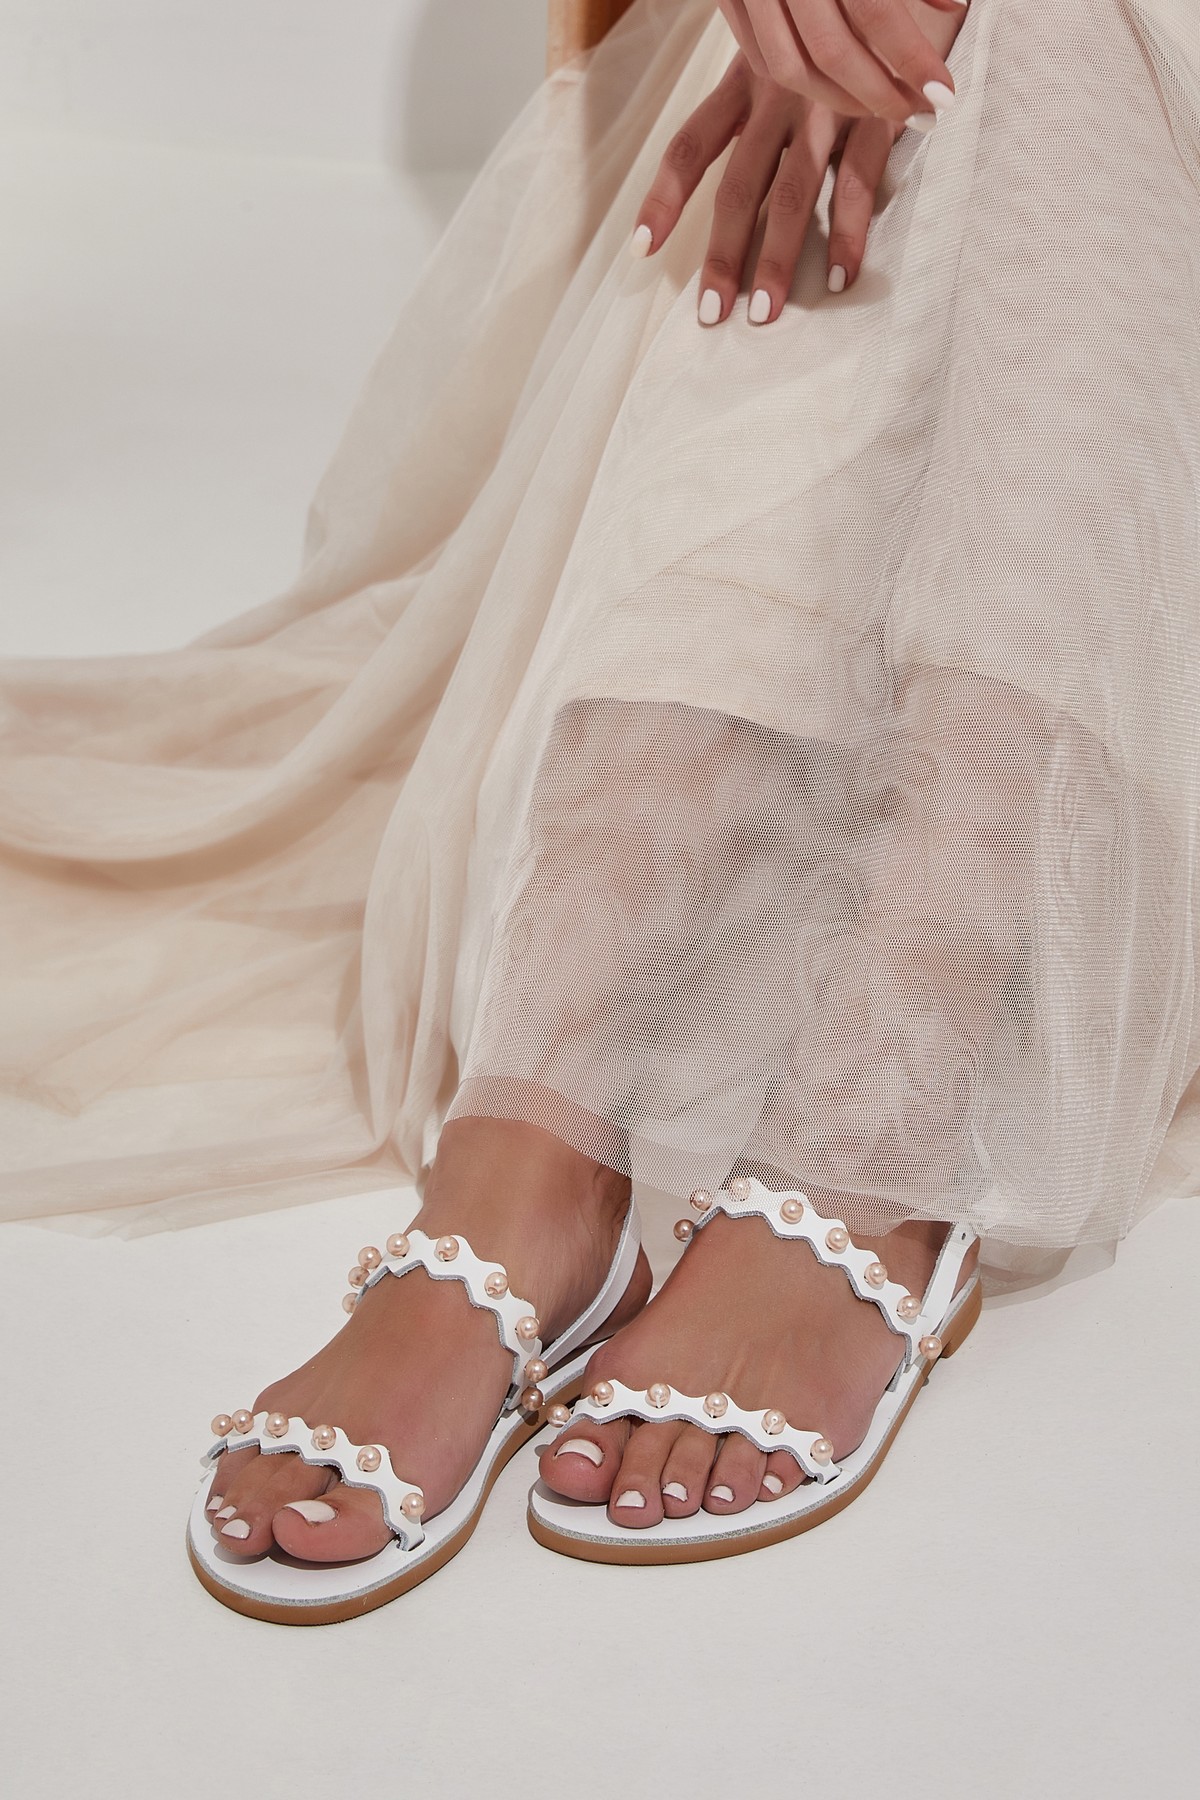 Greek Wedding Sandals